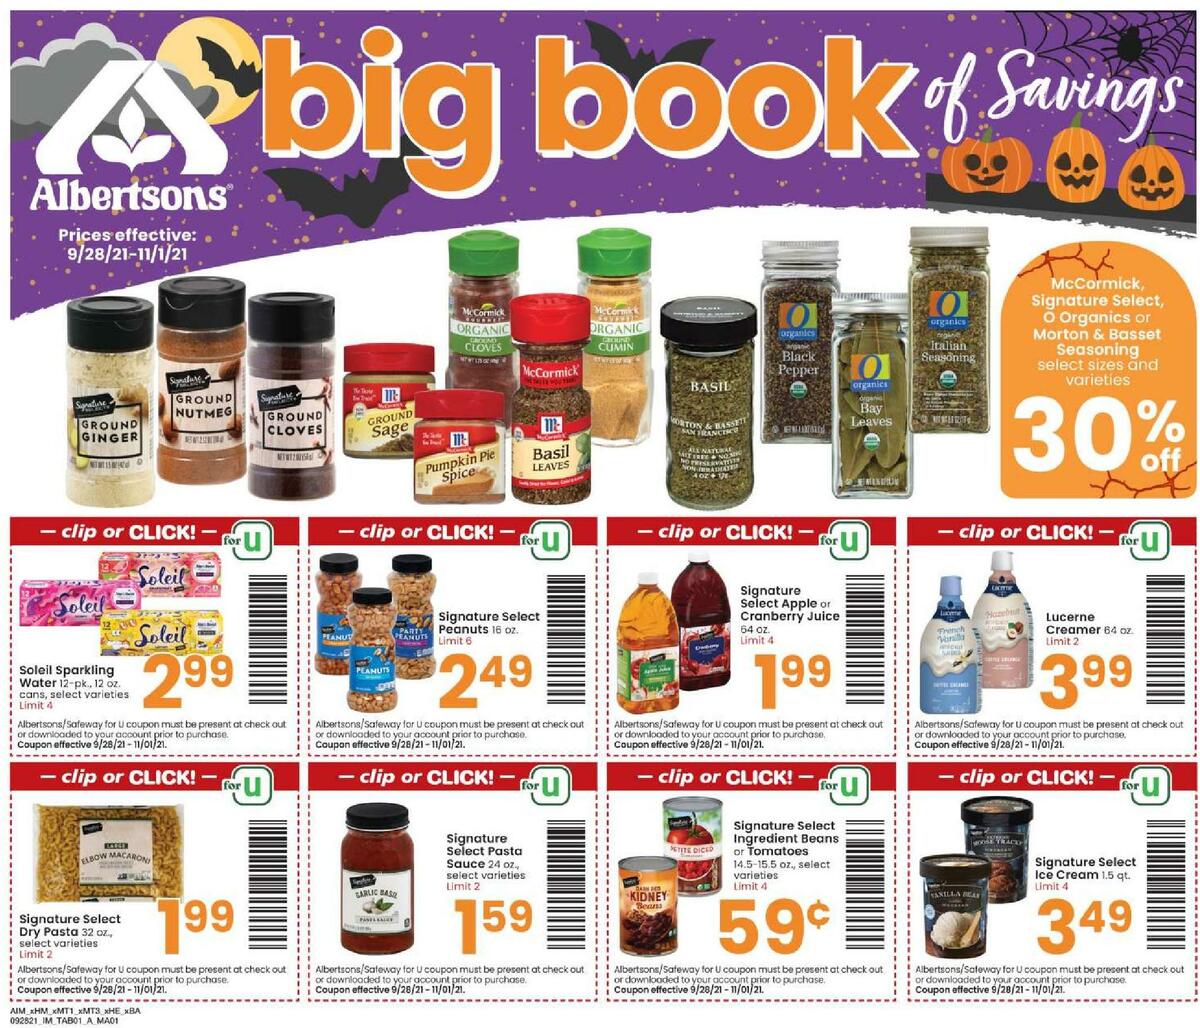 Albertsons Big Book of Savings Weekly Ad from September 28